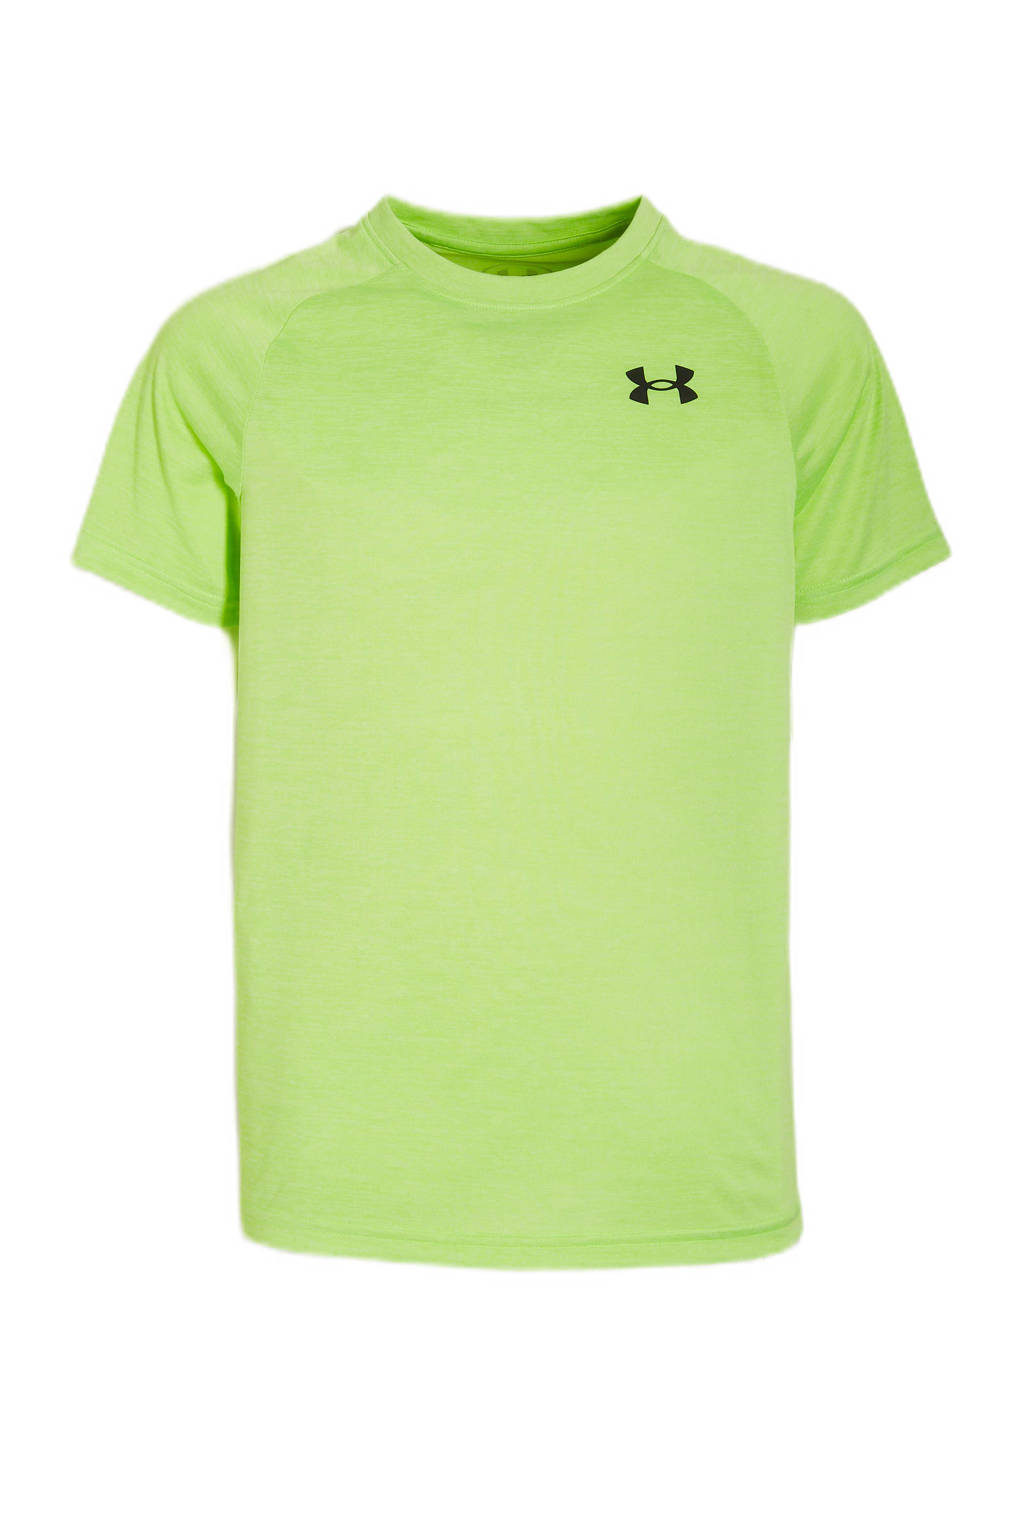 Limegroene jongens Under Armour sport T-shirt Tech 2.0 van polyester met melée print, korte mouwen en ronde hals